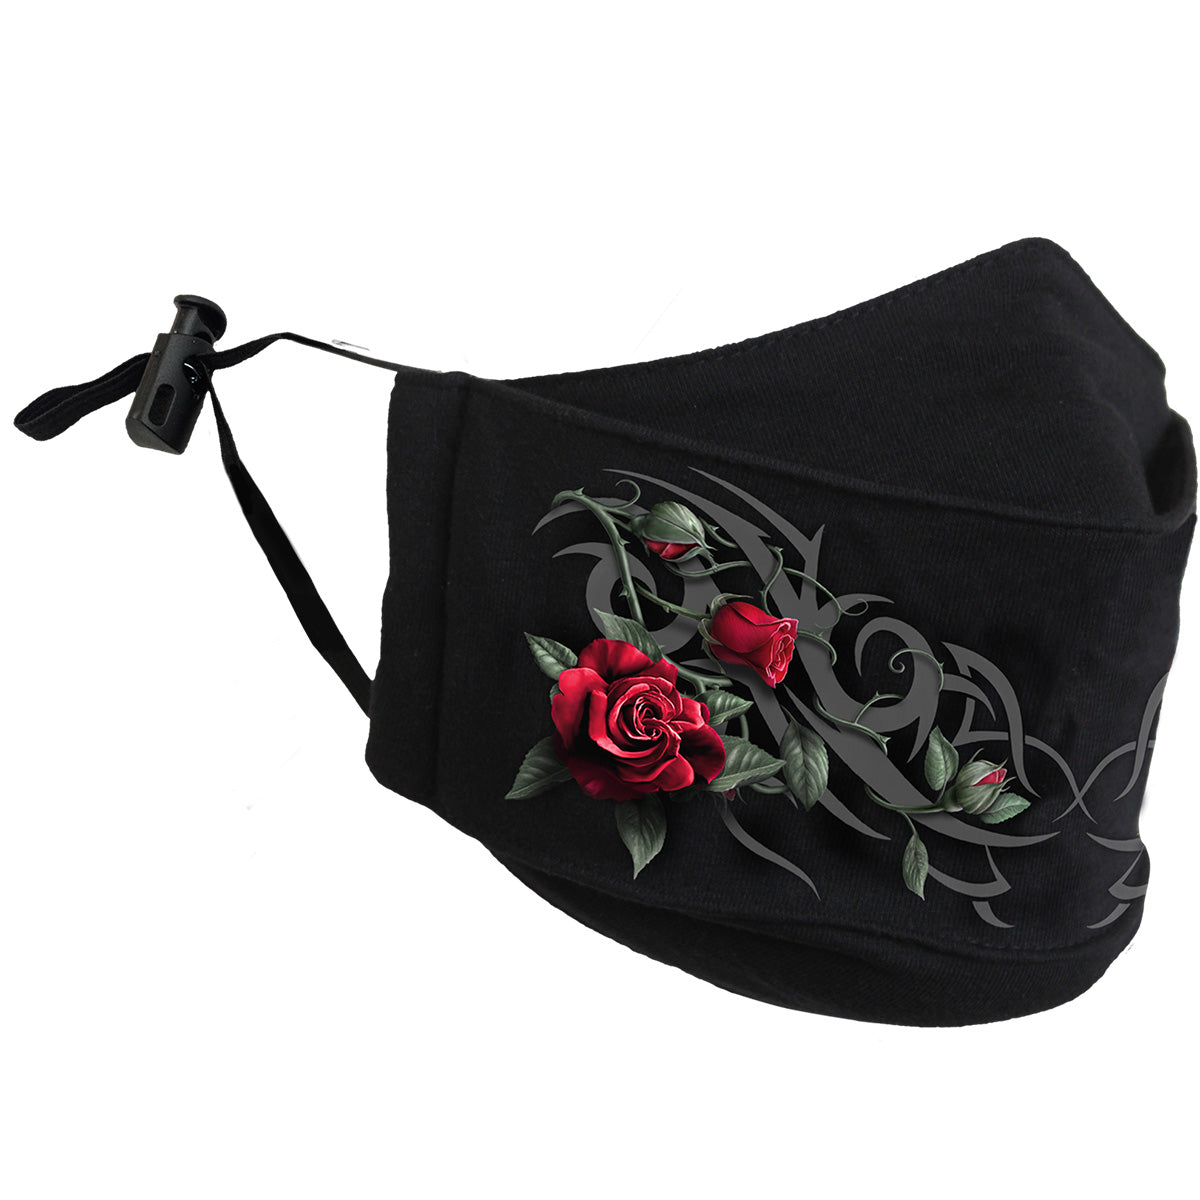 TRIBAL ROSE - Premium Cotton Fashion Mask with Adjuster